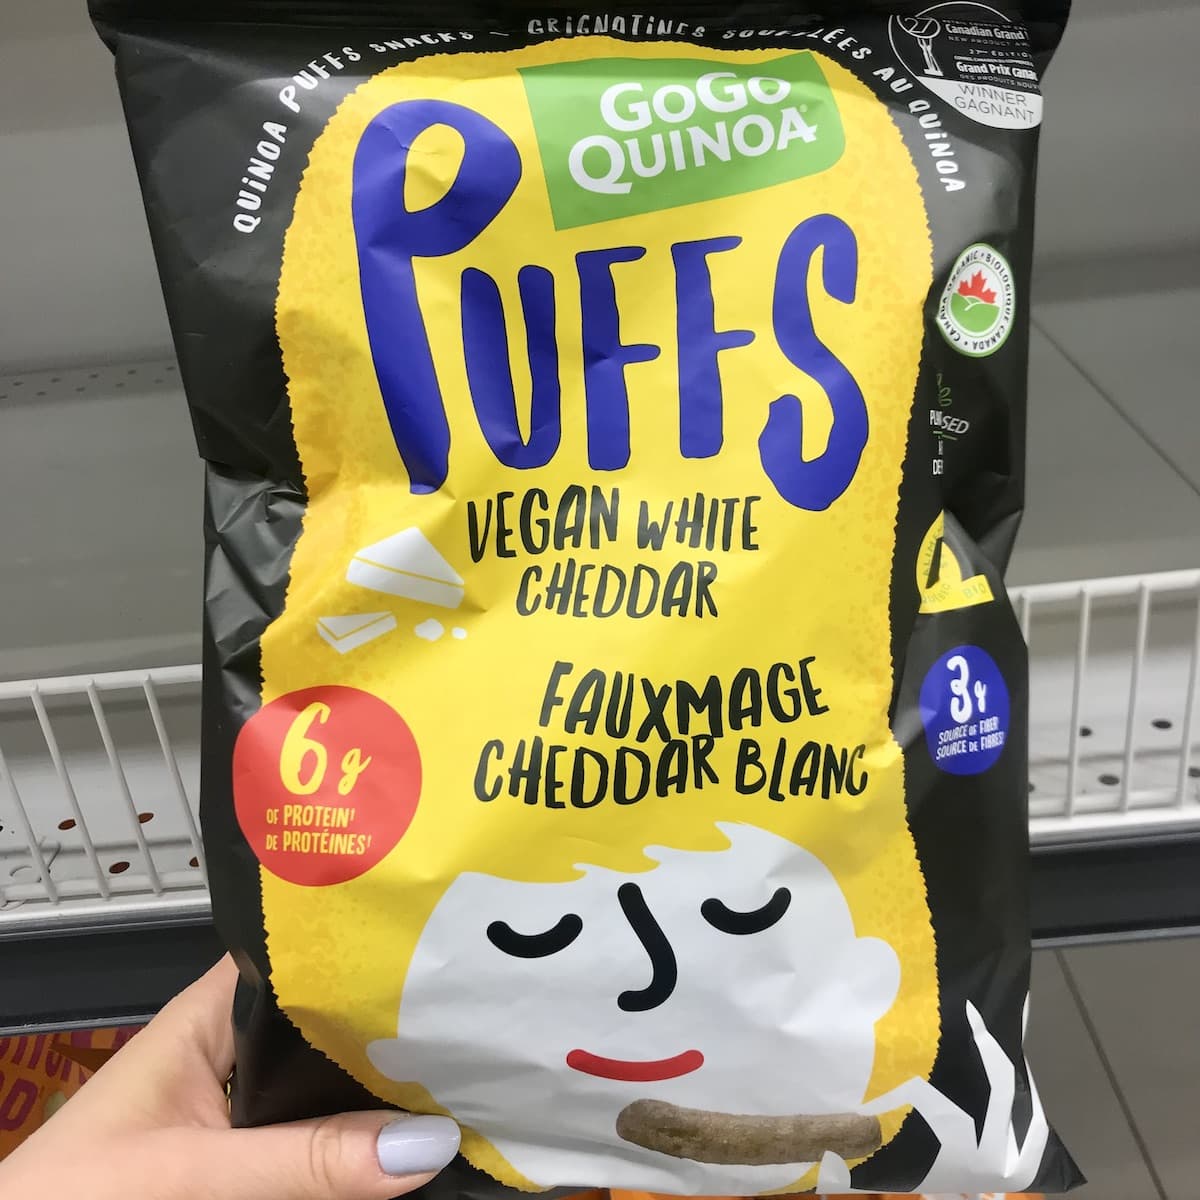 A bag of GoGo Quinoa Vegan White Cheddar Puffs.